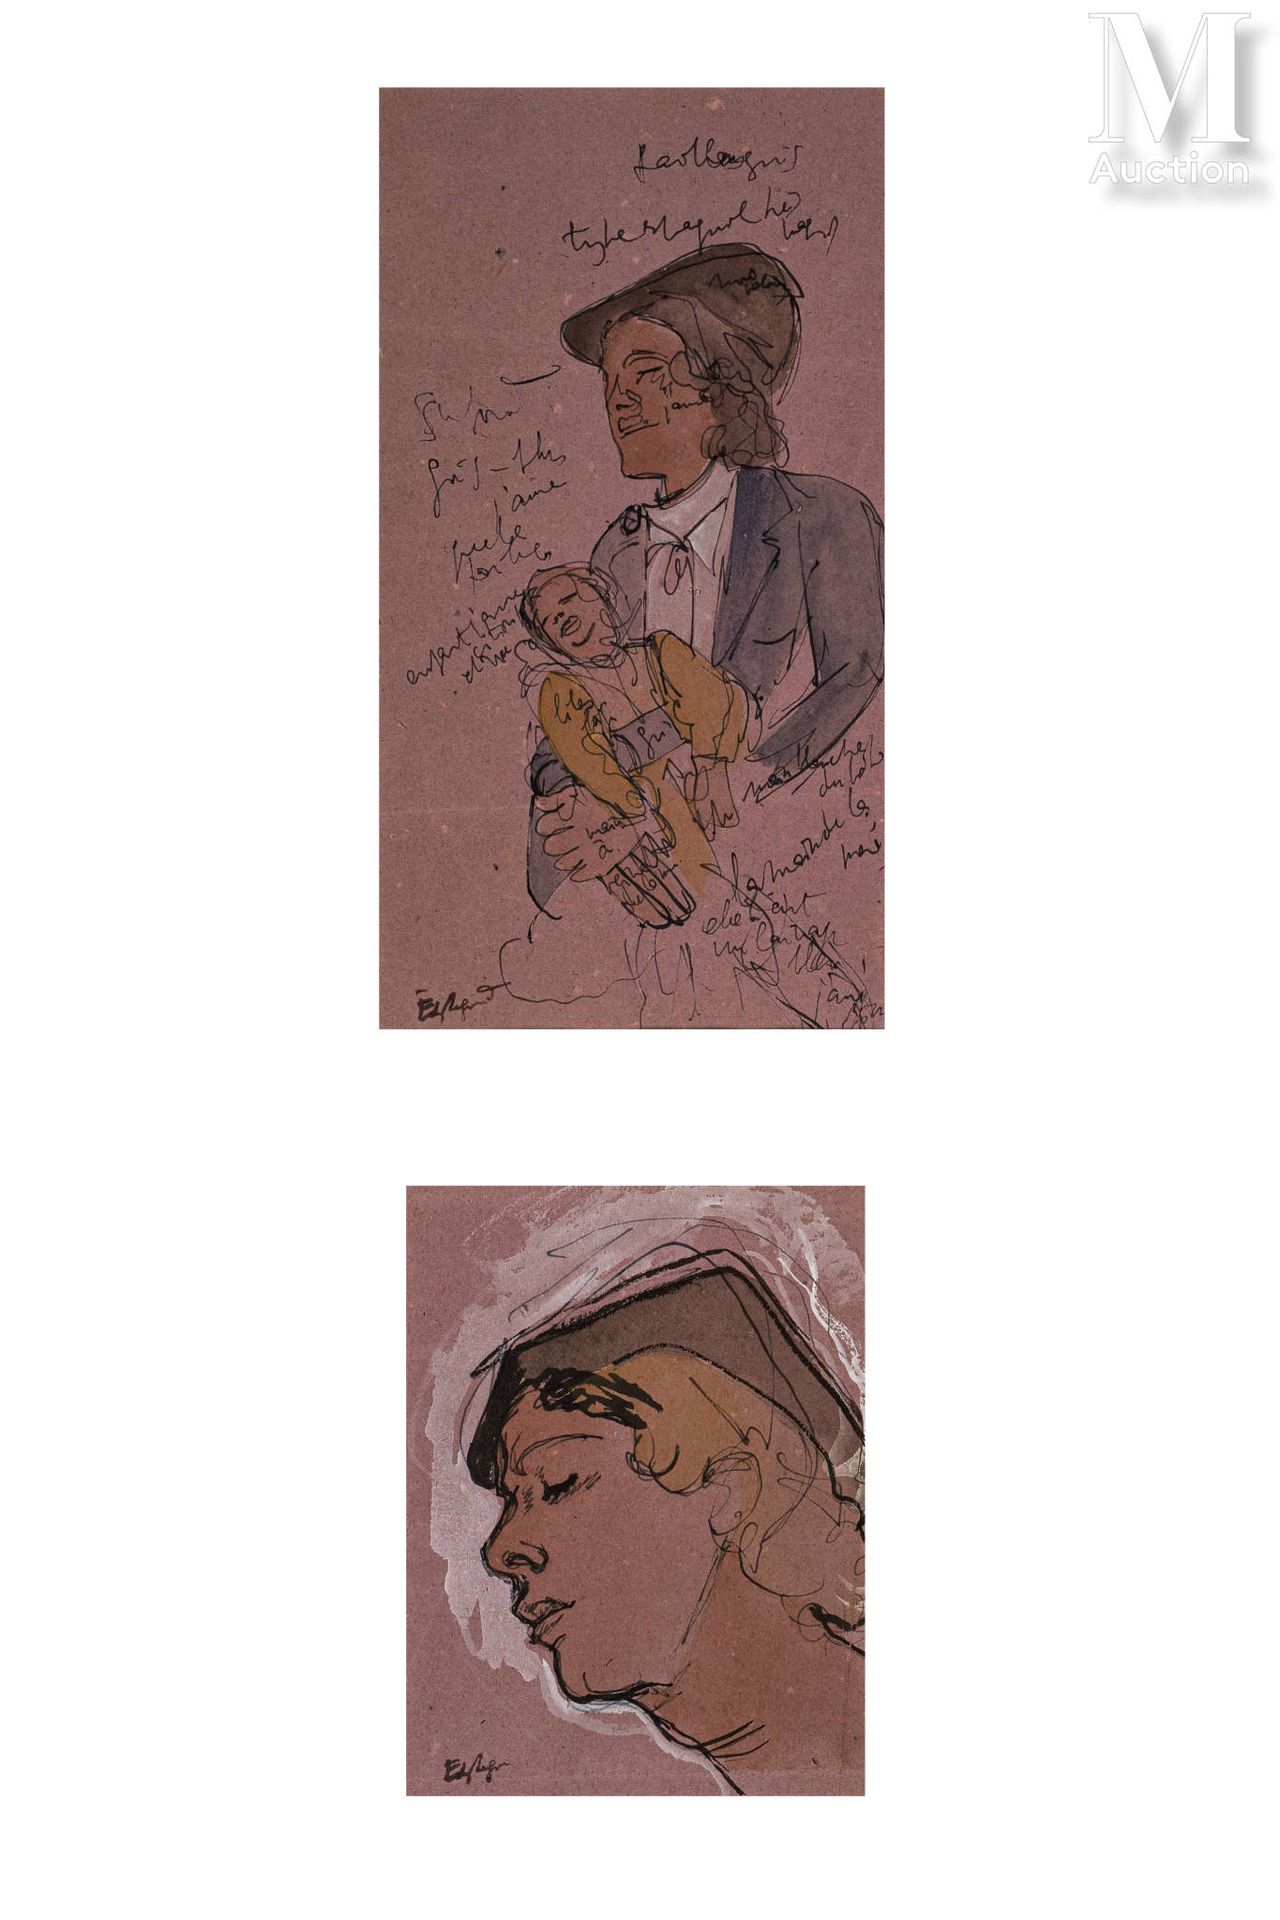 EDY LEGRAND (Bordeaux 1892-Bonnieux 1970) 鸭子

纸上水粉画

25 x 31厘米

签名右下：E.L